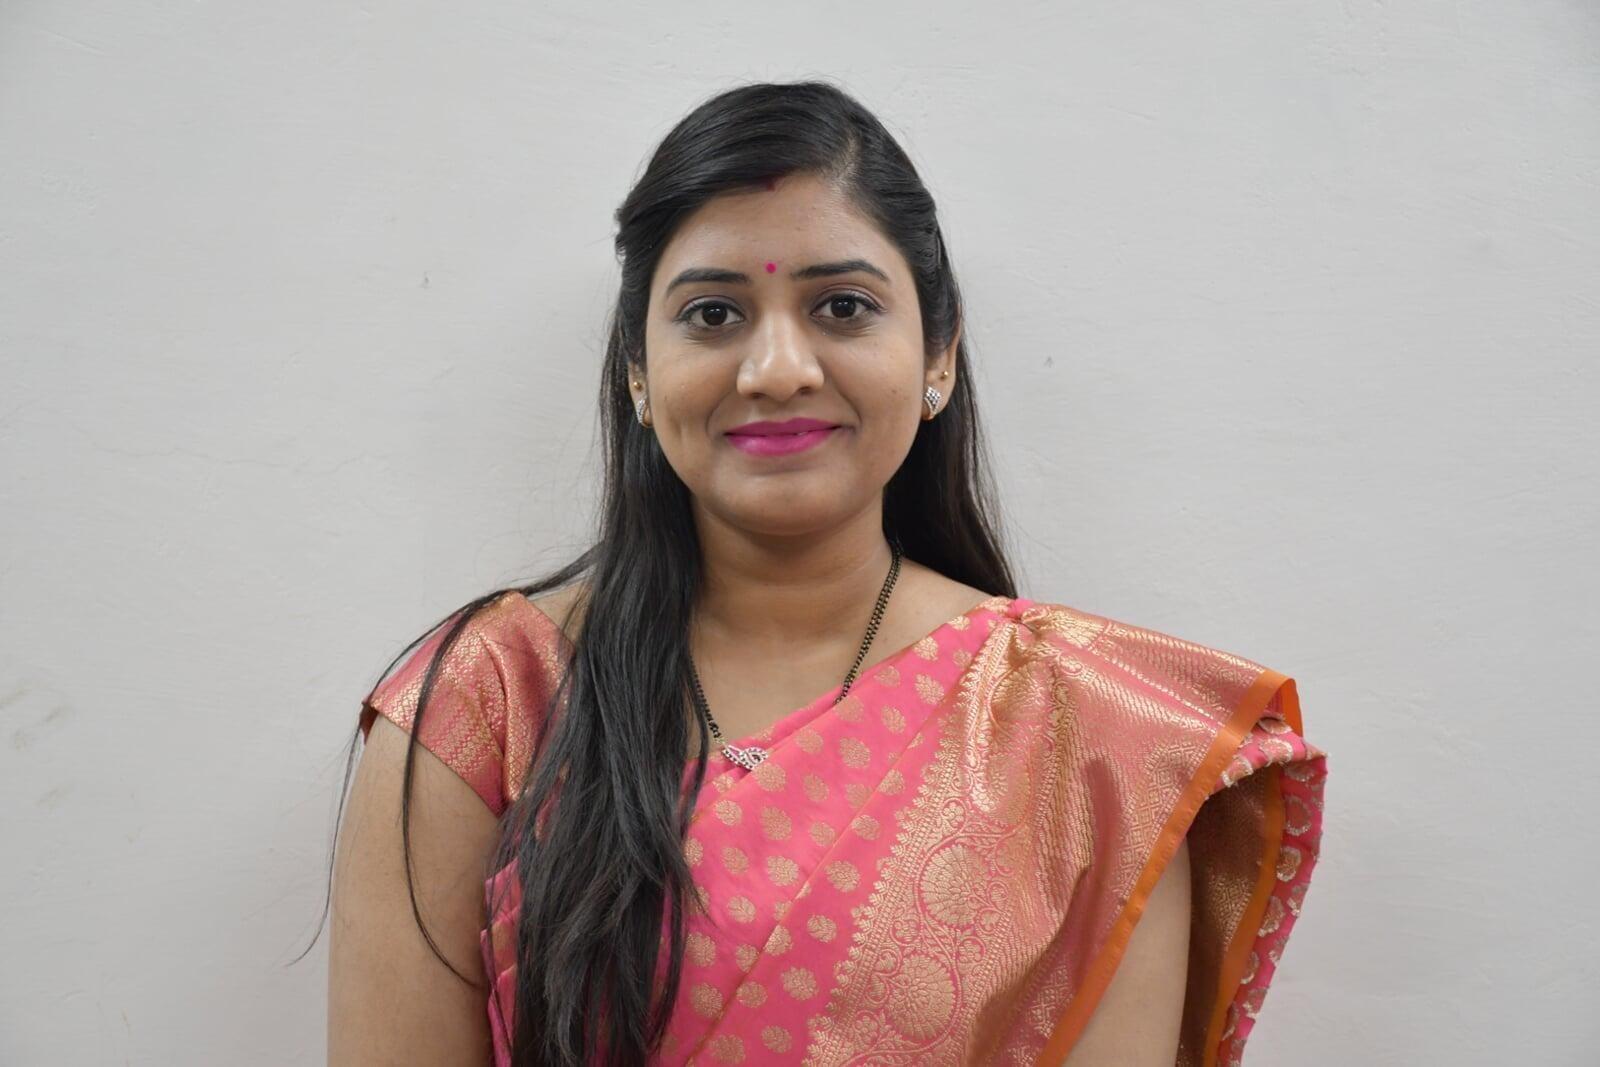 Ms. Niharika Shukla B.Tech Civil Engineering Faculty at ITS